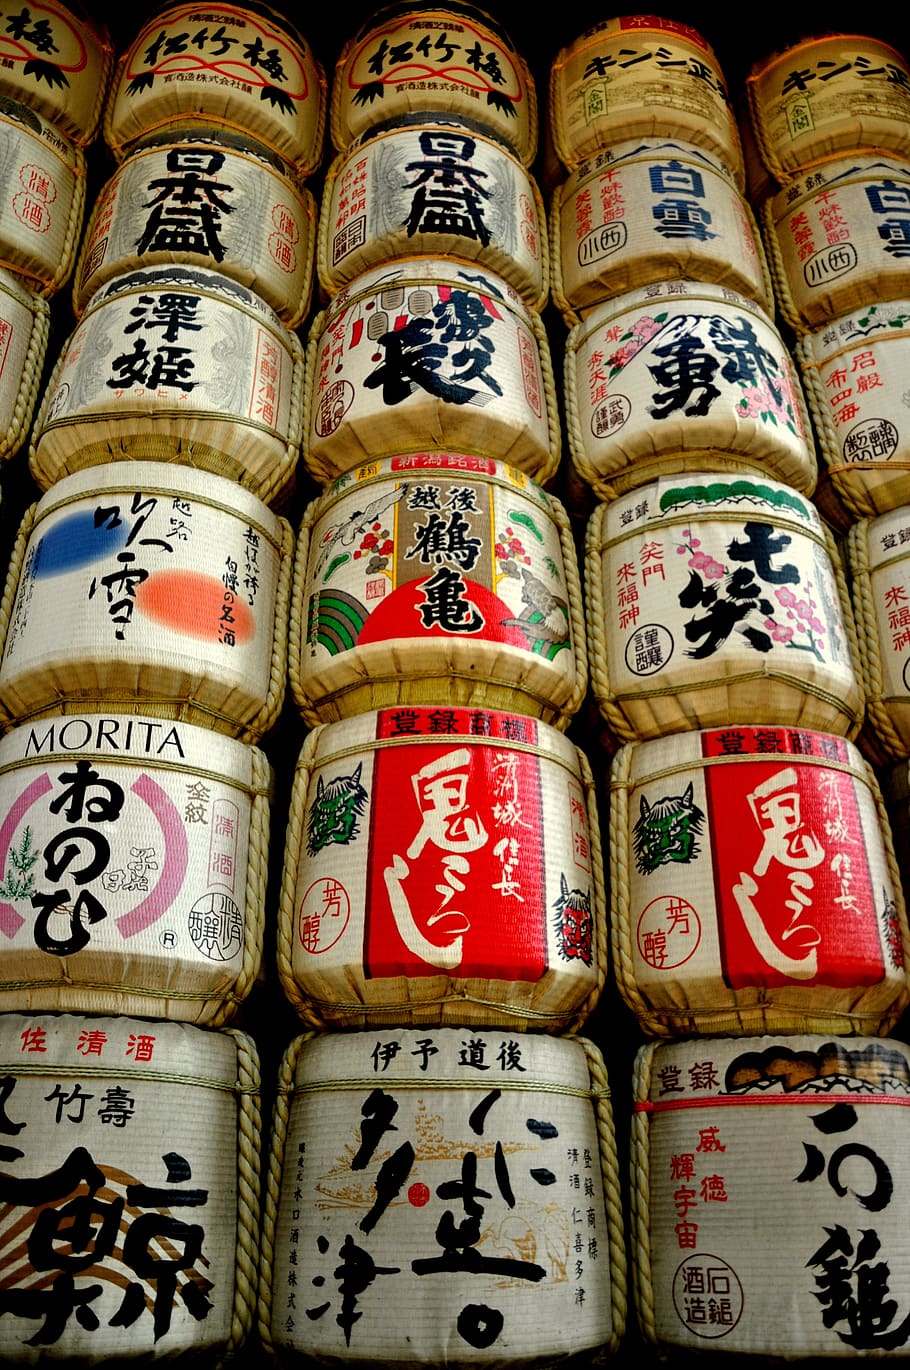 sake, jepang, asia, tradisi, bar, teks, berturut-turut, komunikasi, wadah, sekelompok besar objek